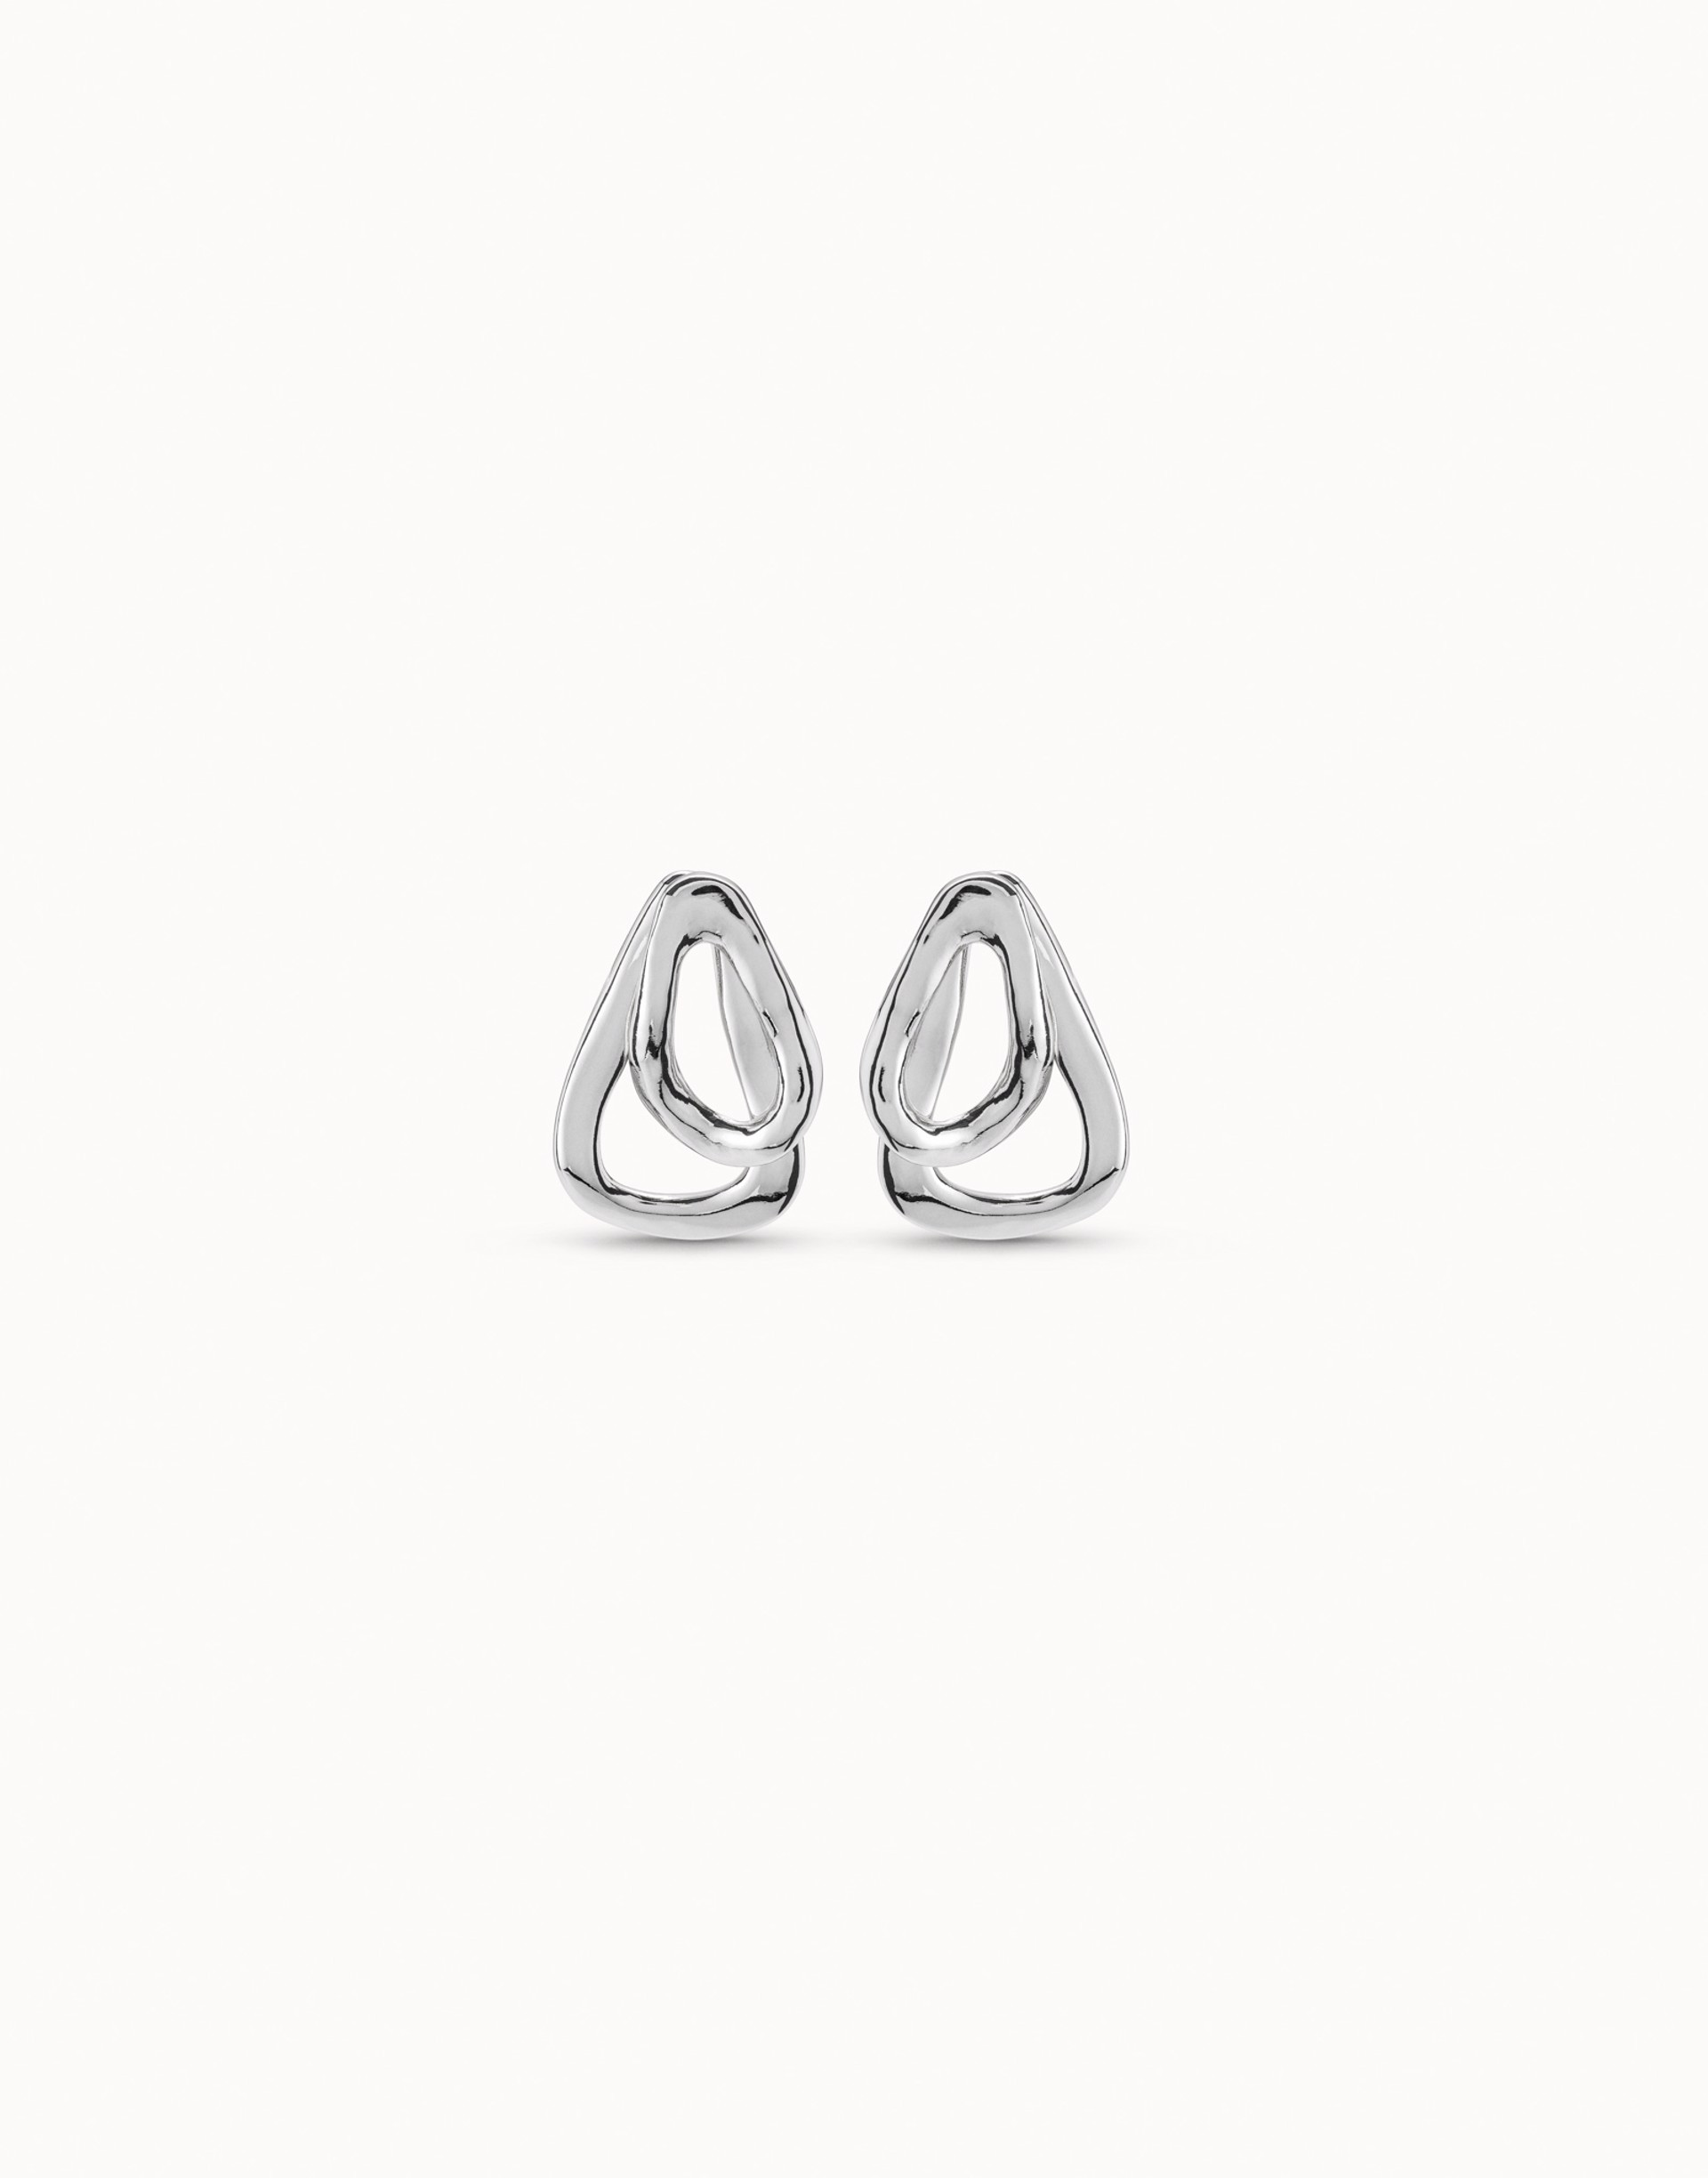 Connected Earrings by UNO DE 50